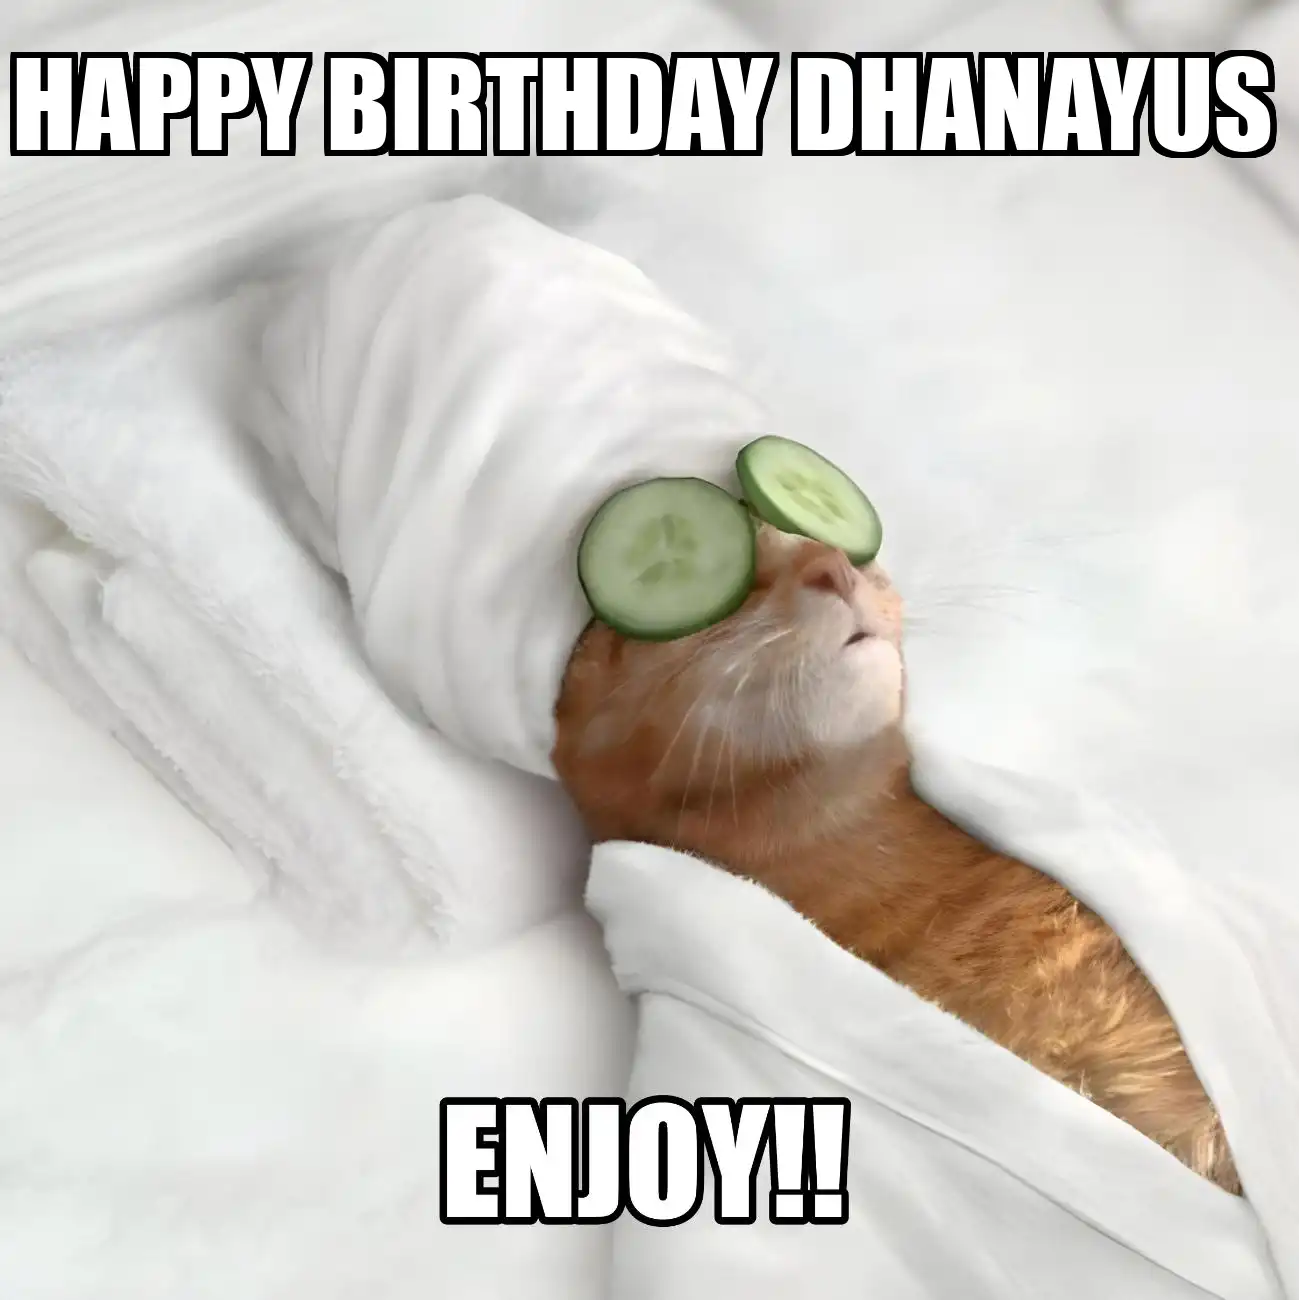 Happy Birthday Dhanayus Enjoy Cat Meme